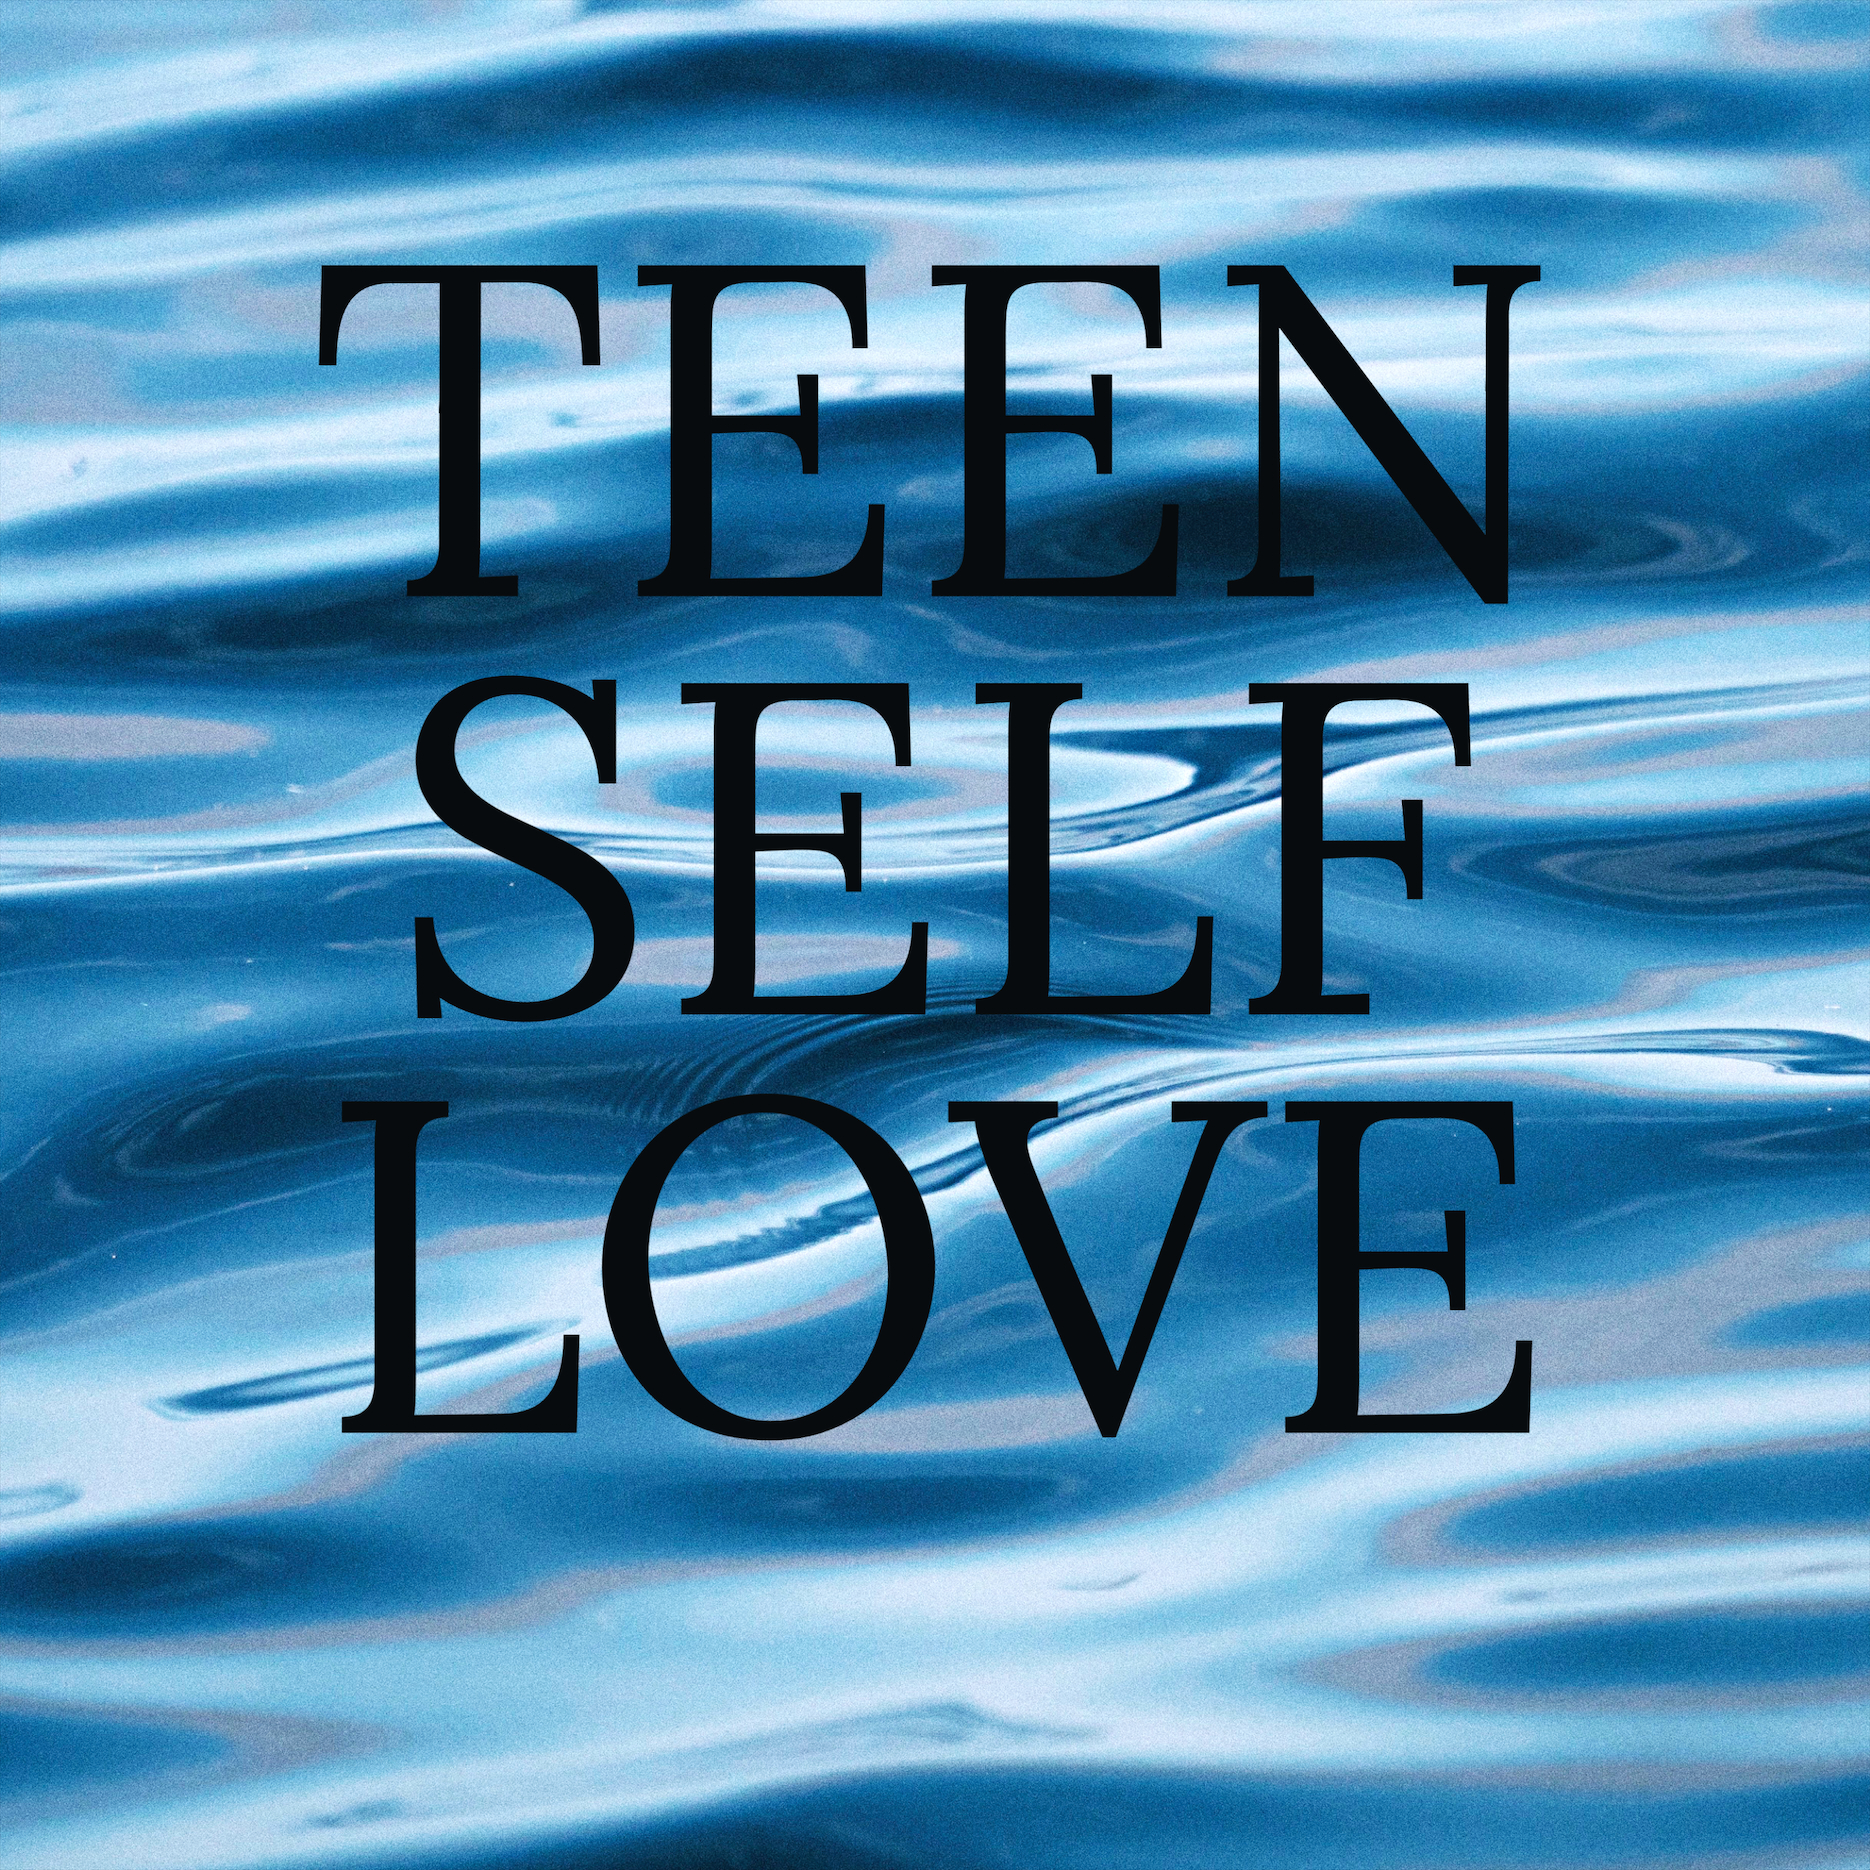 Teen self love, Ep. 2